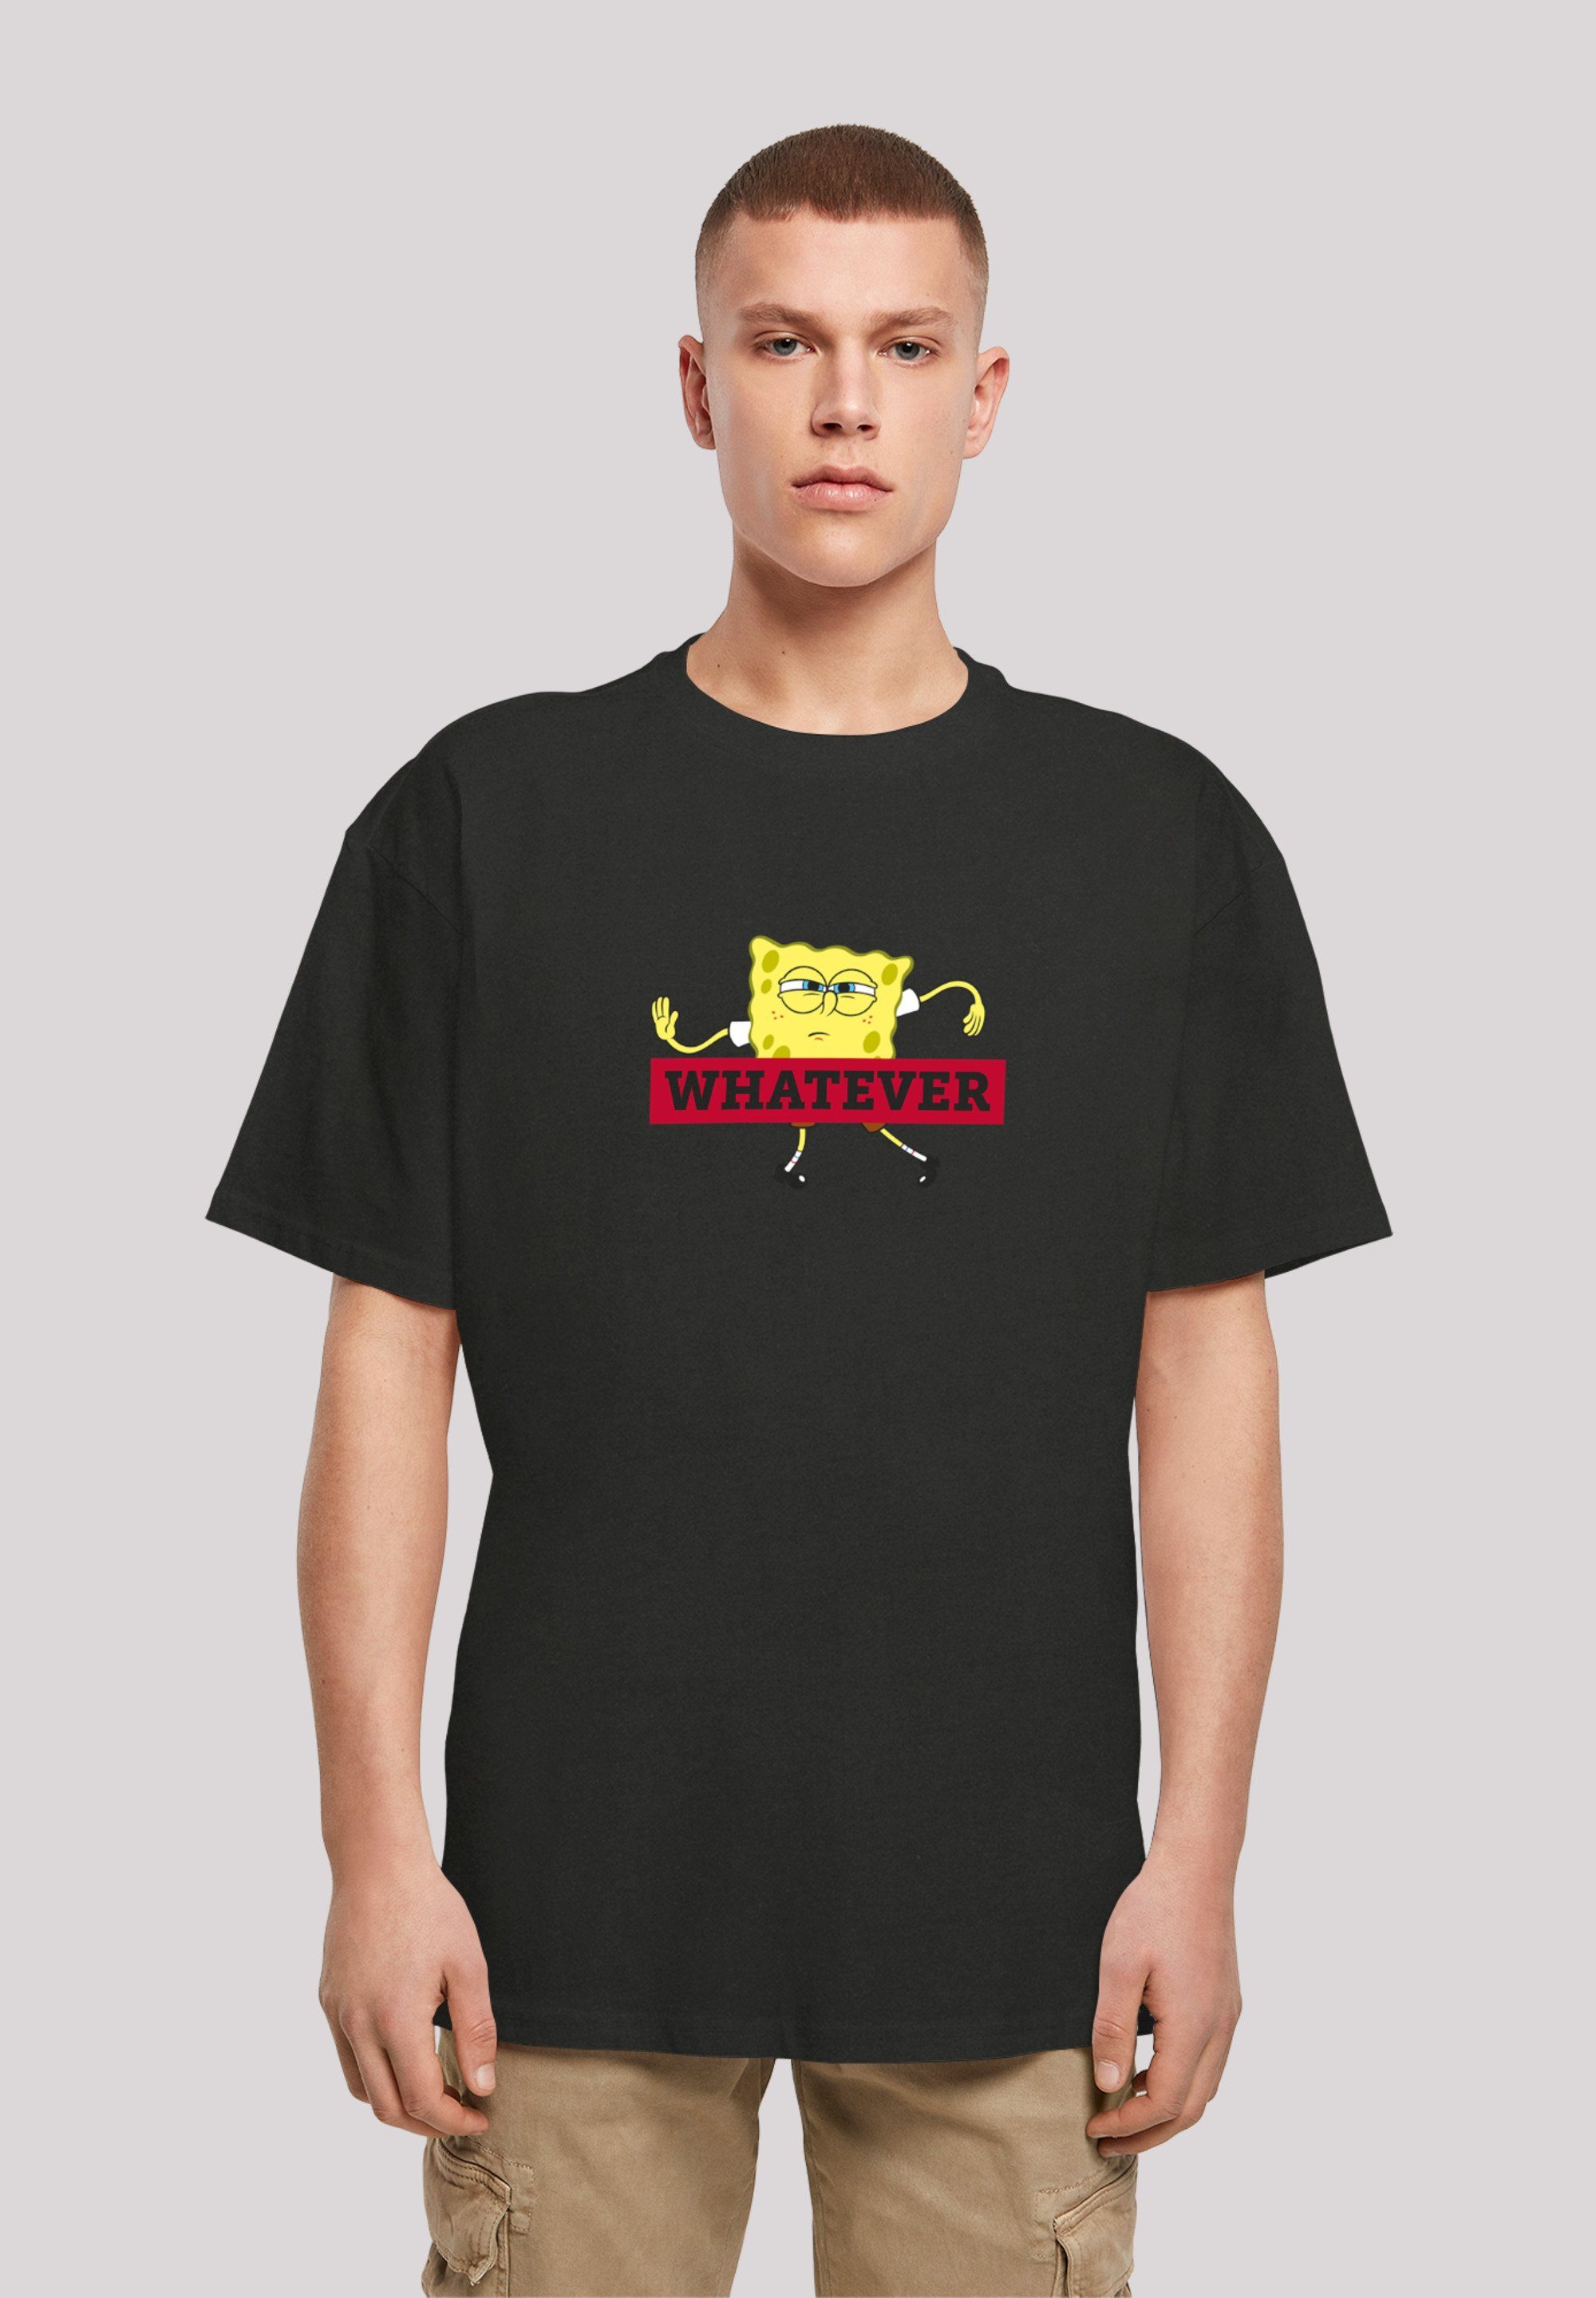 Schwammkopf Print F4NT4STIC Spongebob WHATEVER T-Shirt schwarz